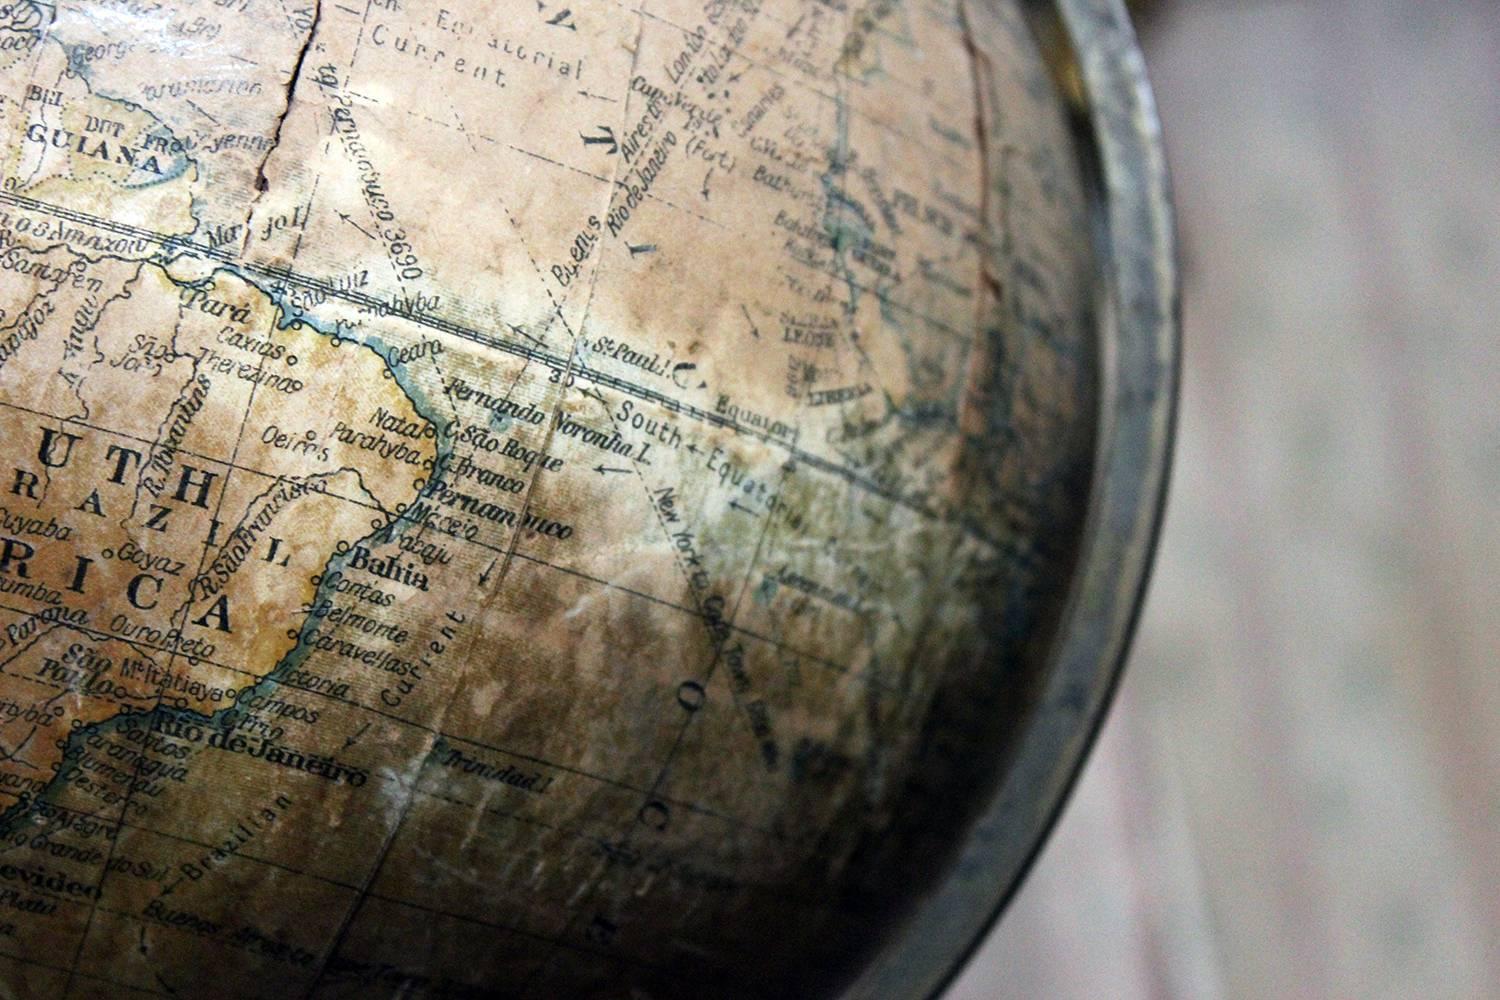 Wood Early 20th Century 8” Terrestrial Table Globe ‘Geographia’, circa 1920-1925